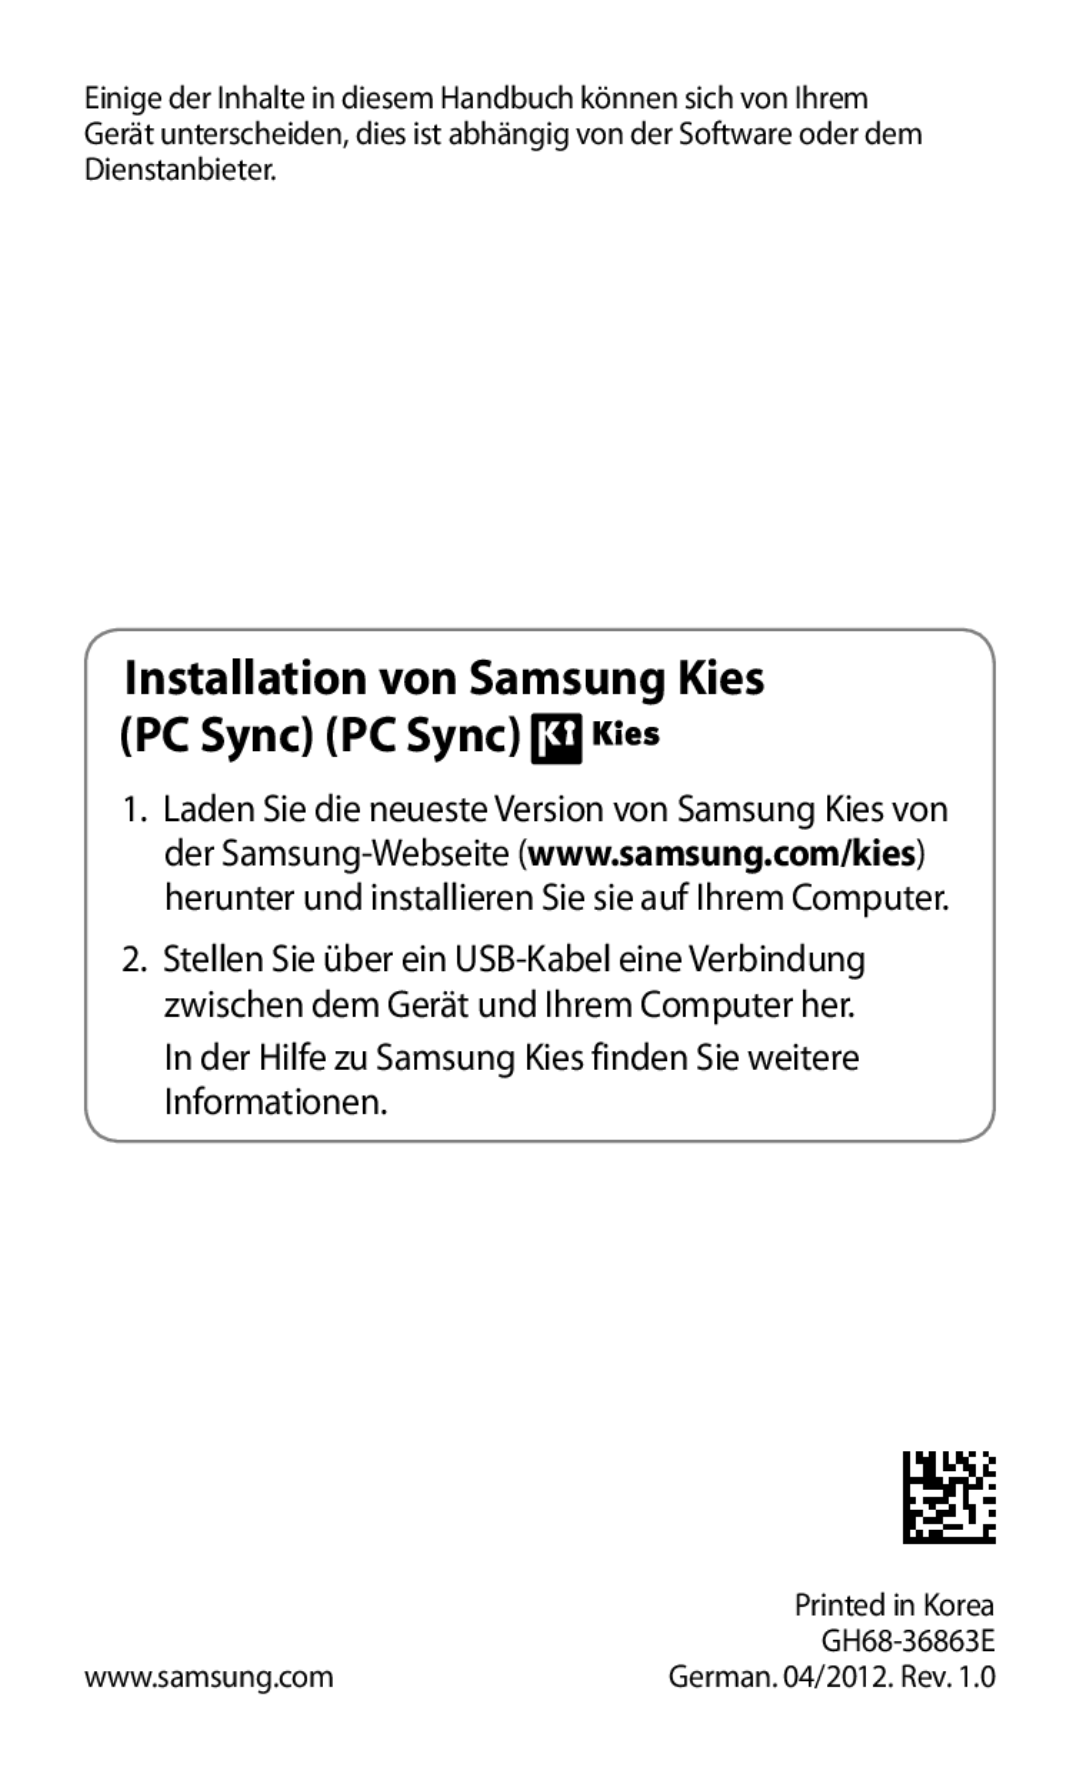 Samsung GT-P3100TSETPH, GT-P3100TSAVD2 manual Installation von Samsung Kies PC Sync PC Sync, Printed in Korea, GH68-36863E 